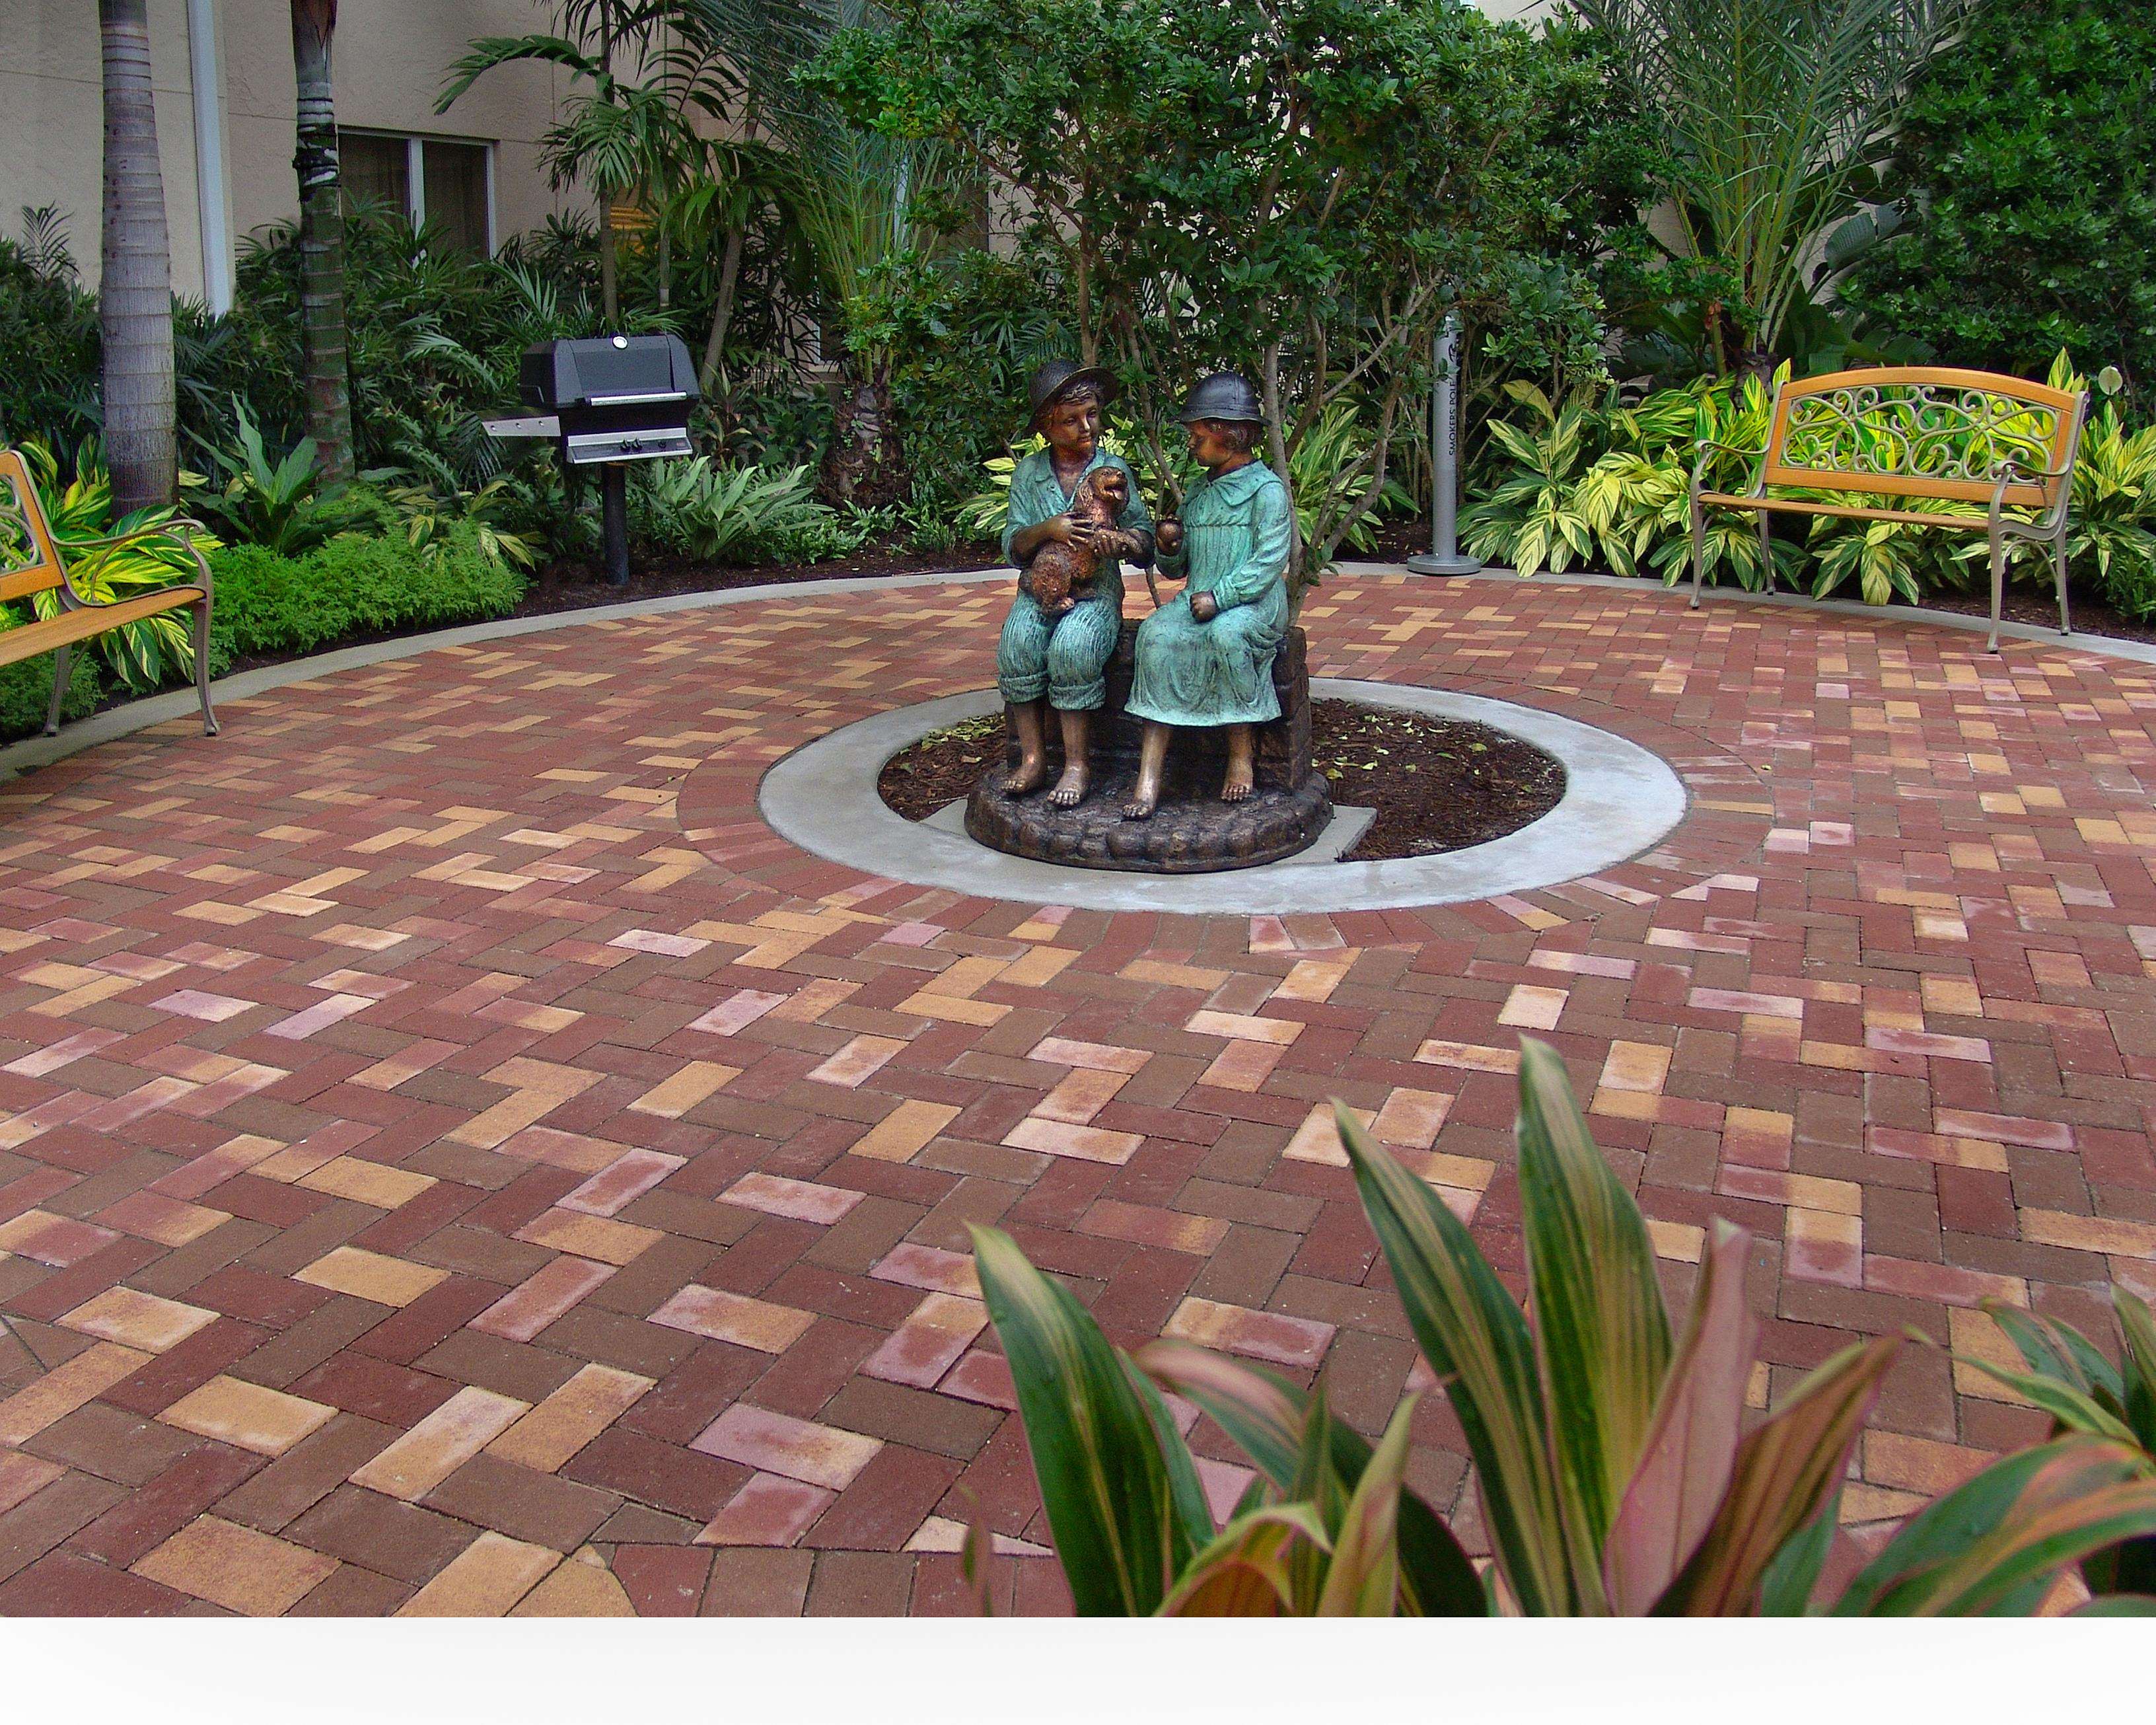 Homewood Suites by Hilton Palm Beach Gardens 4700 Donald Ross Road Palm